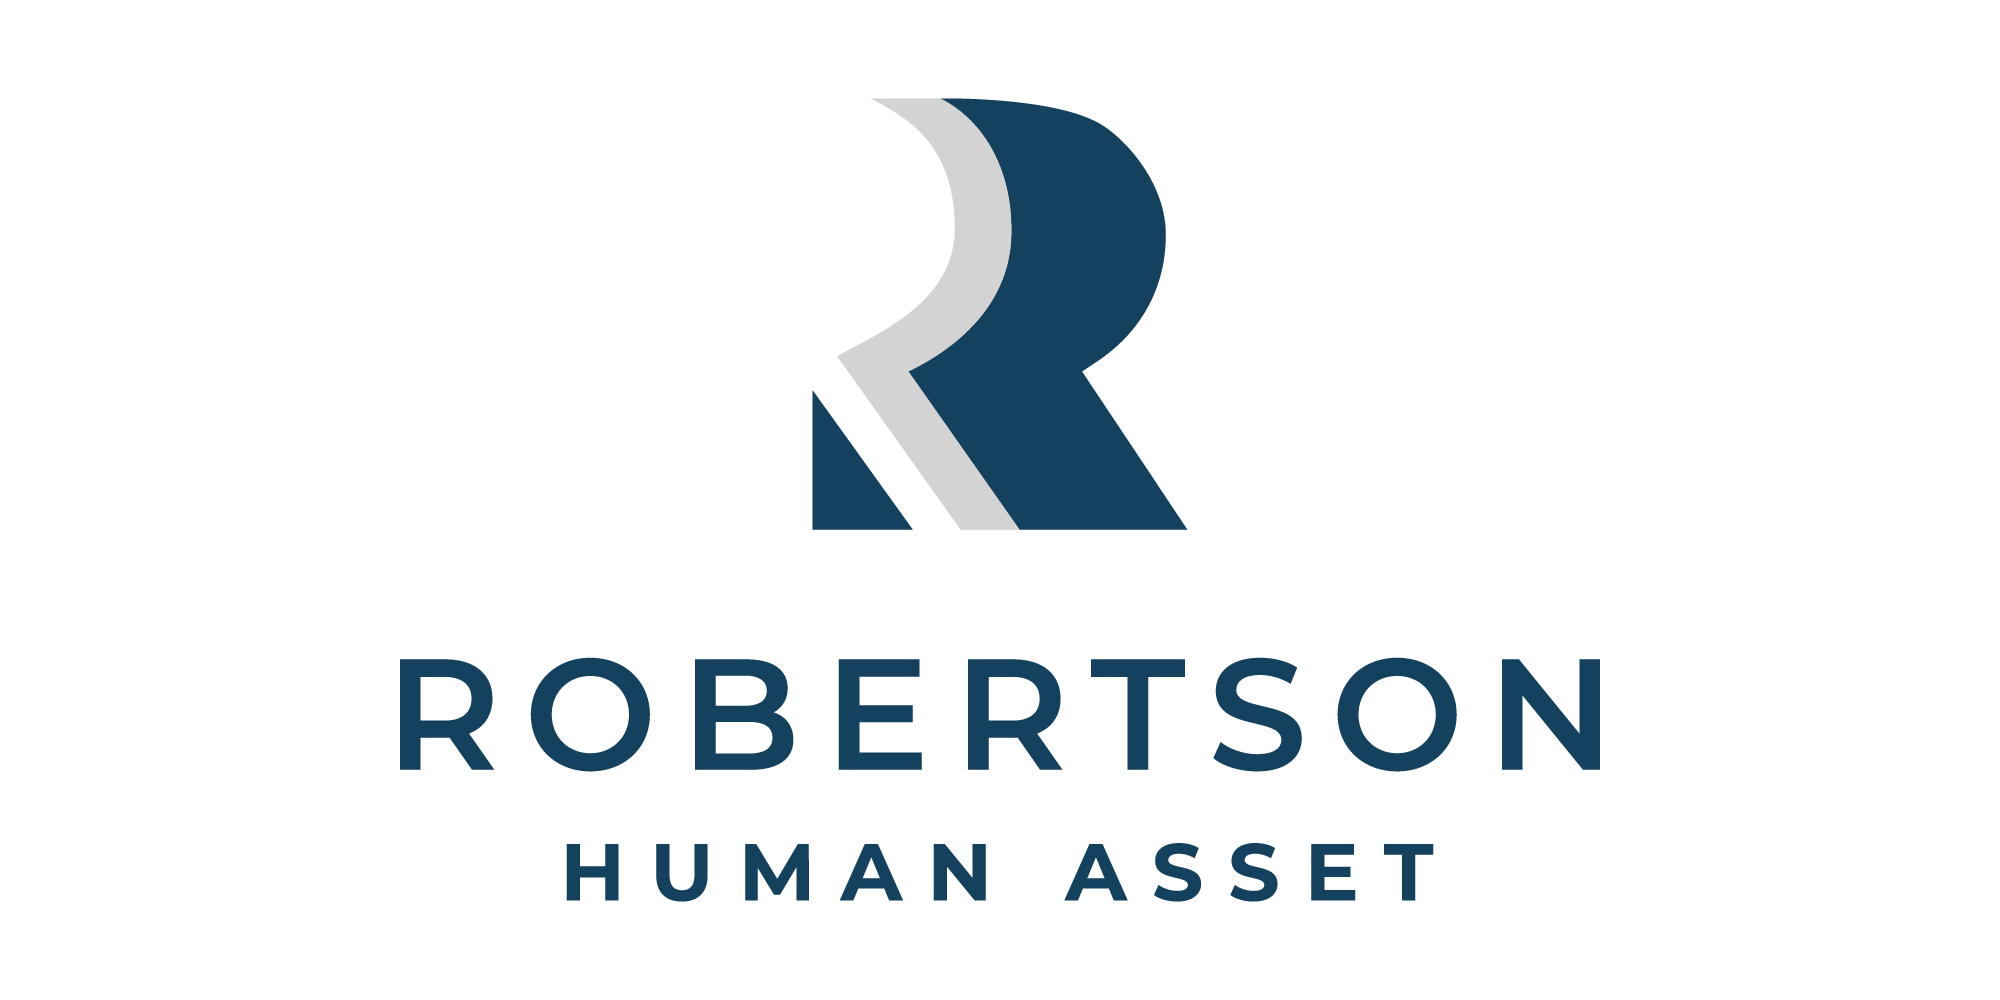 Robertson Human Asset secondary logo in blue